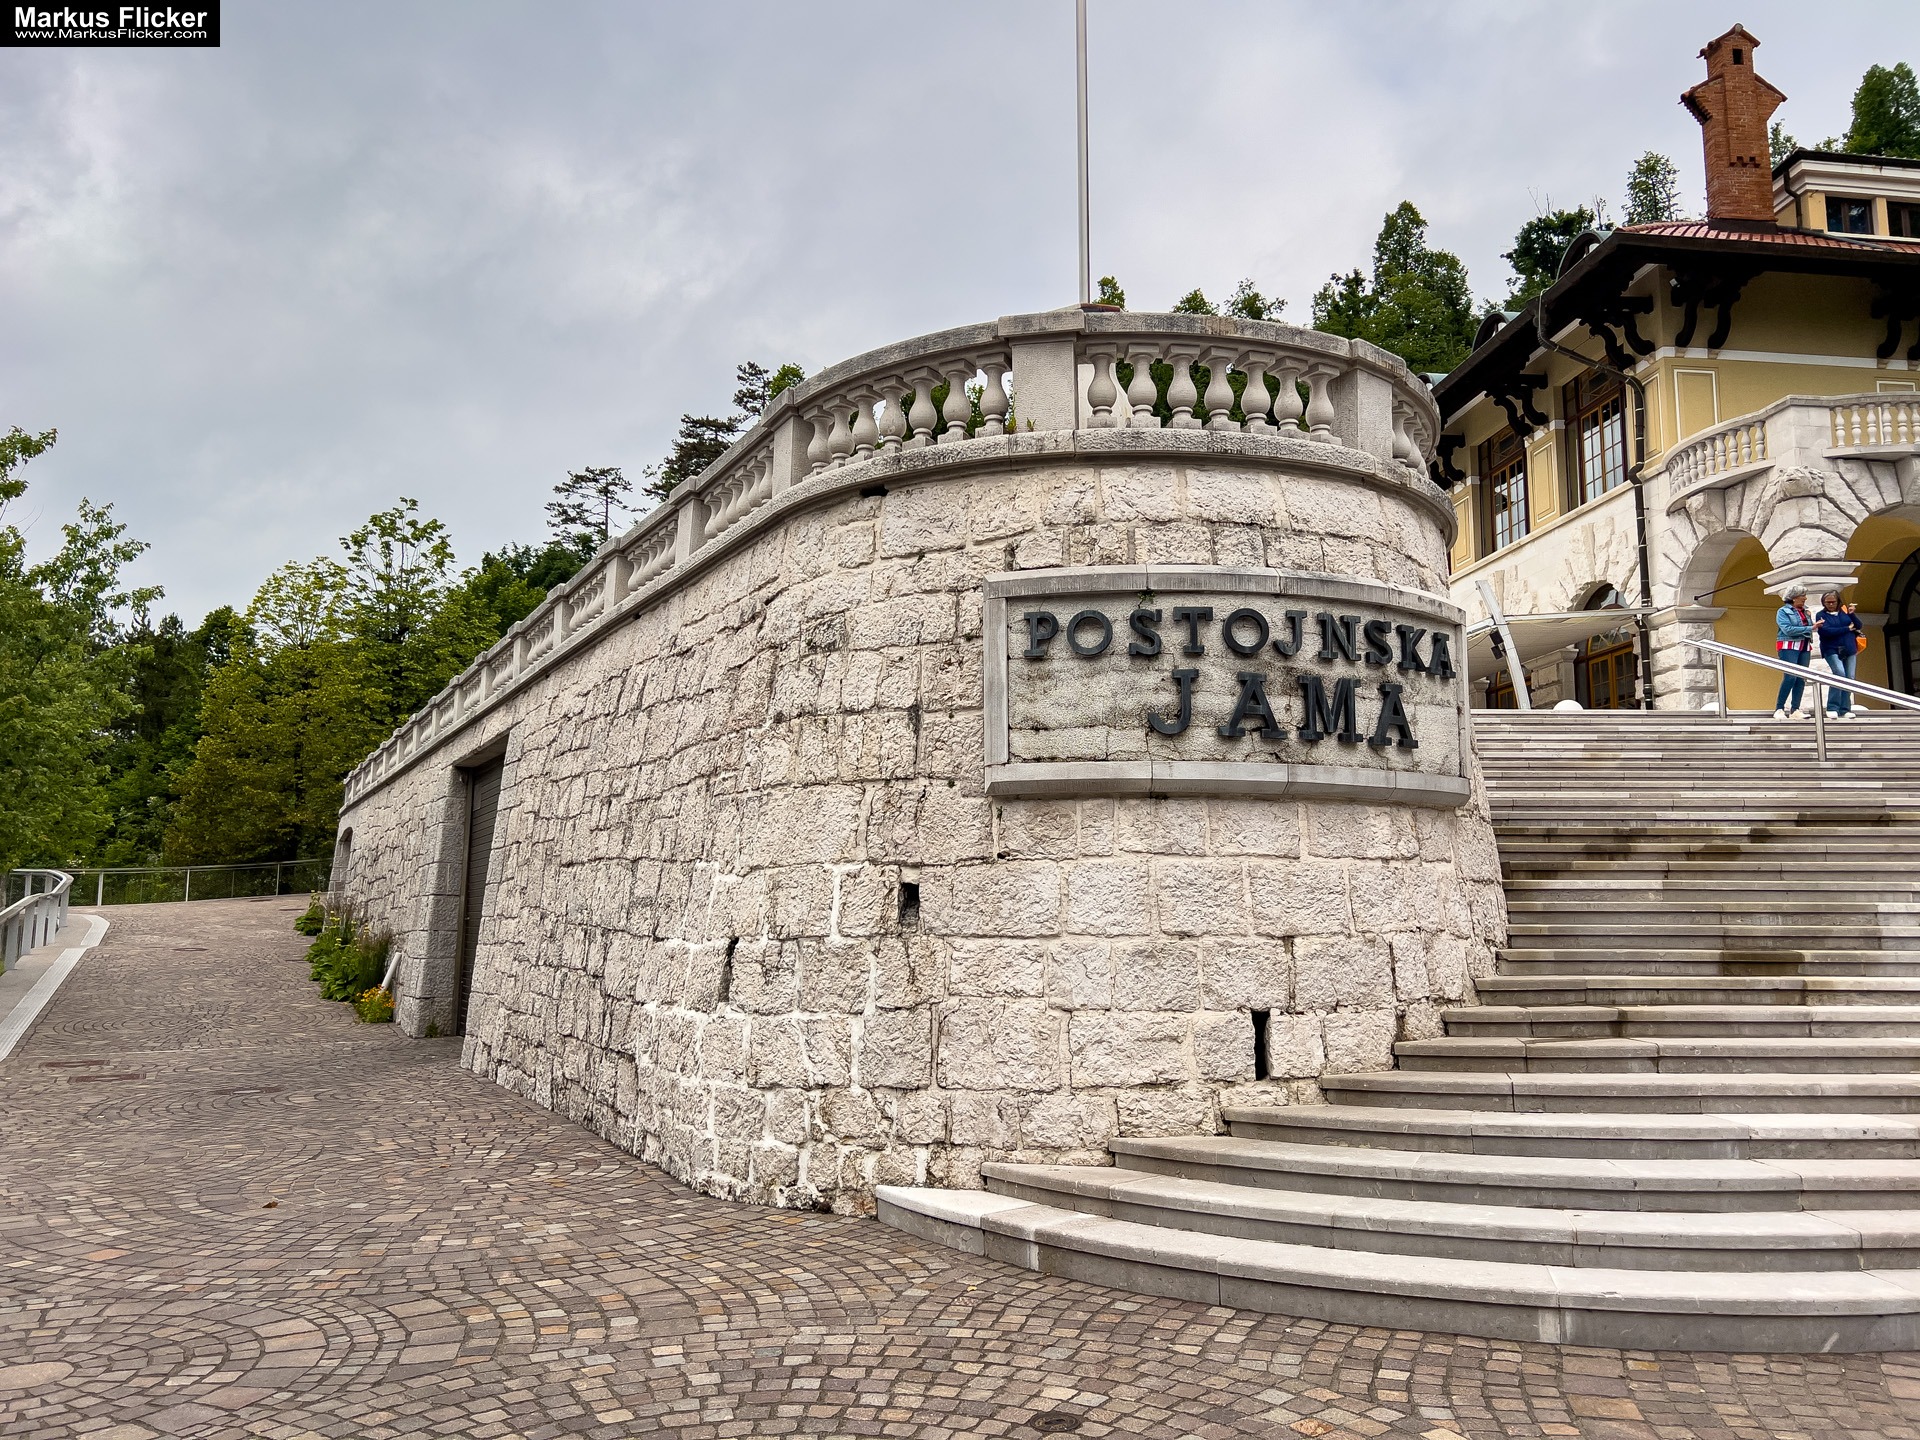 Park Postojna Jama. Höhlen von Postojna in Slowenien #visitslovenia